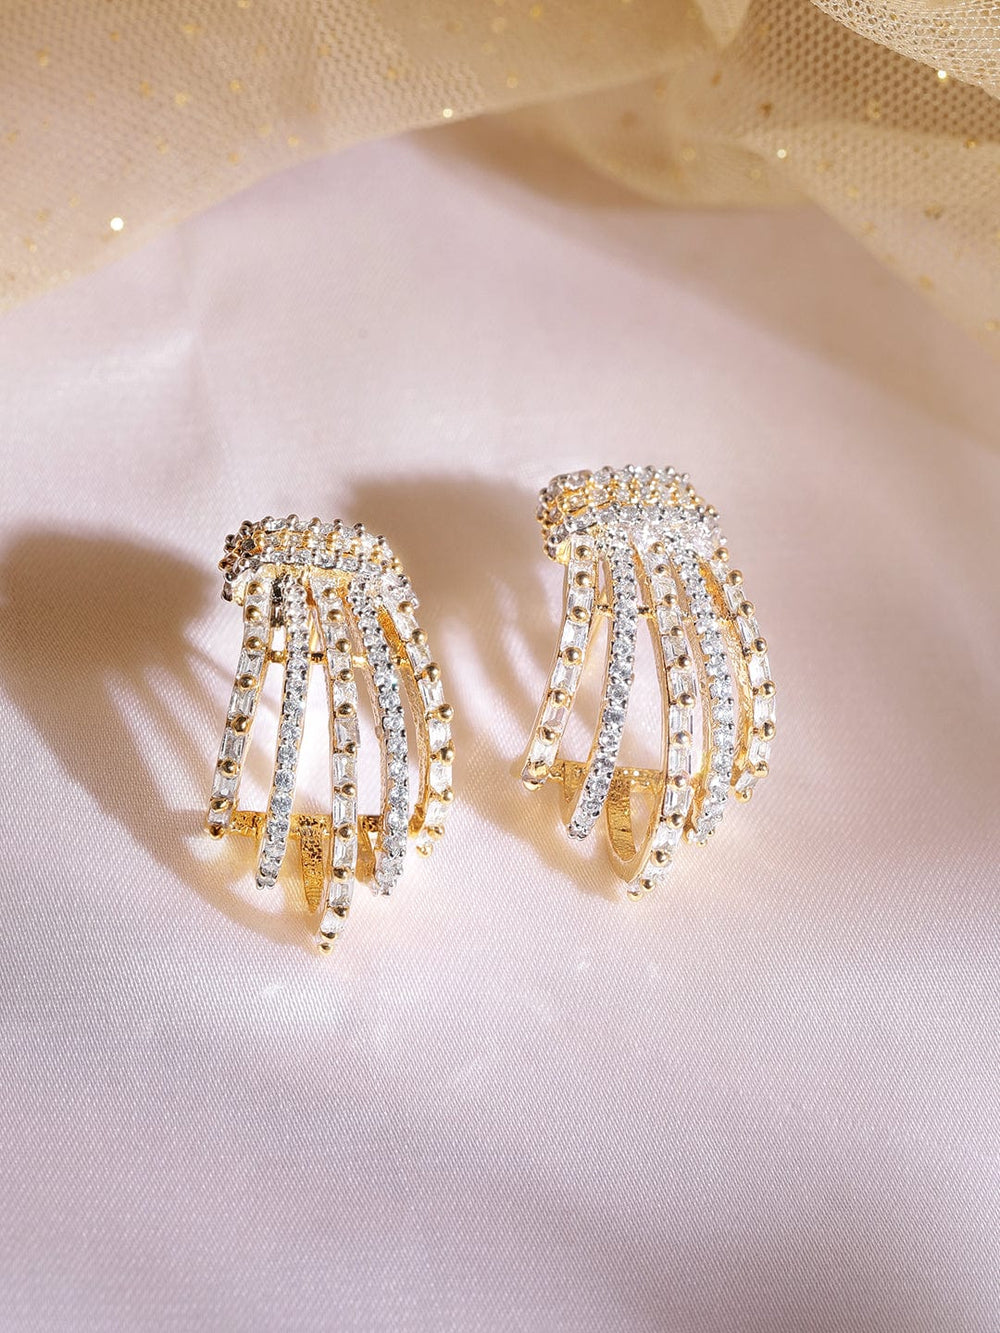 Rubans 22K Gold plated Baguette Crystal Zirconia Exquisite Demi-Fine Earrings Earrings